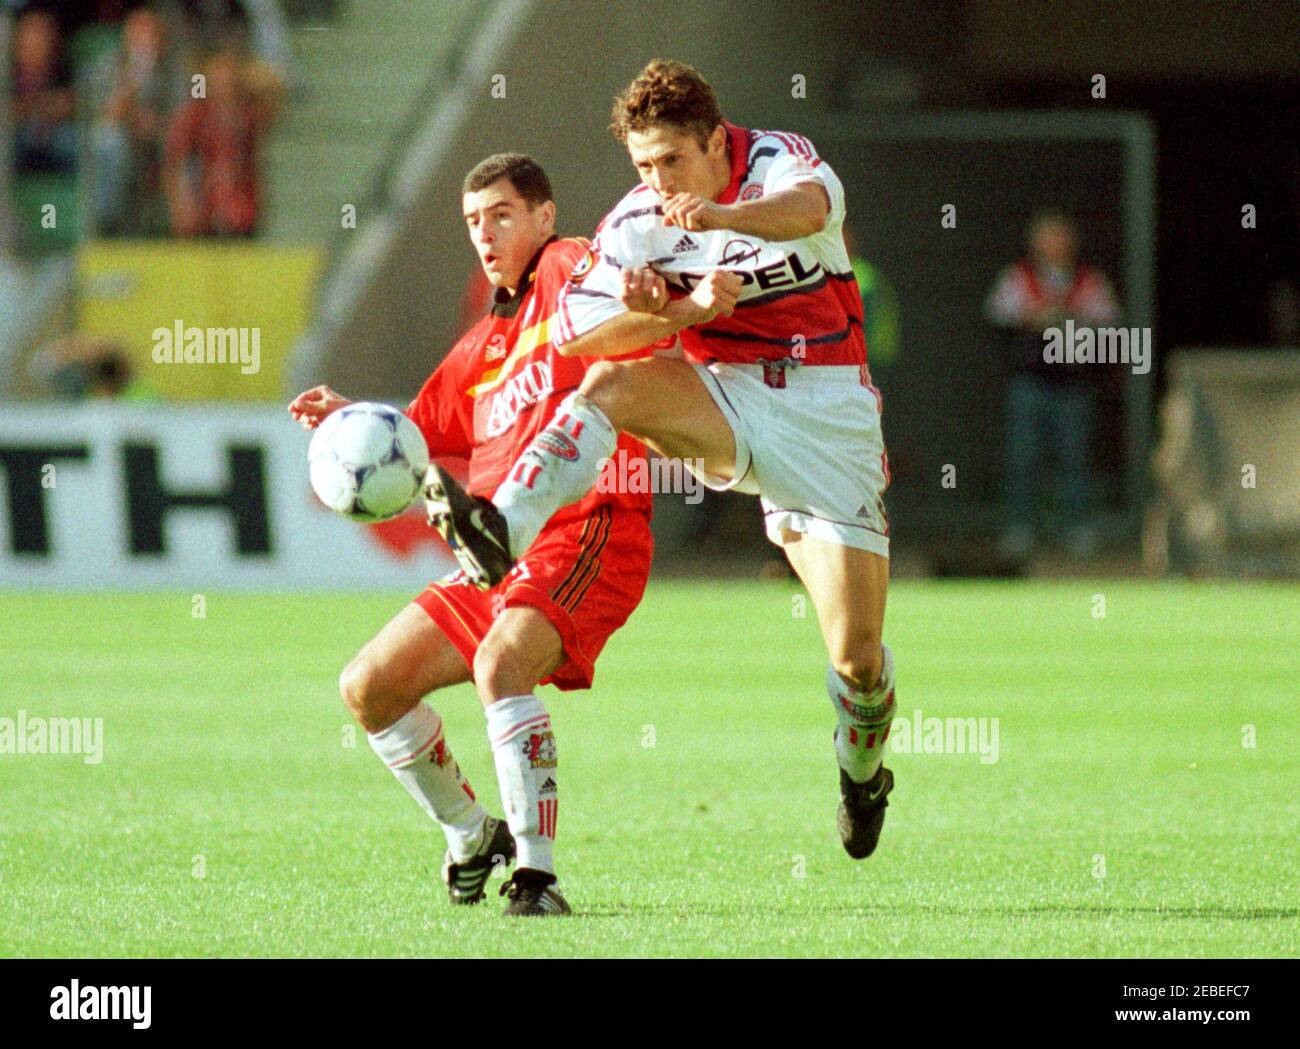 Leverkusen Germany 22.08.1999, Football: Bundesliga season 1999/2000, Bayer 04 Leverkusen (B04, red) vs FC Bayern Munich (FCB, white) 2:0 -  Bixente LIZARAZU (FCB) ,  Robson PONTE (B04) Stock Photo